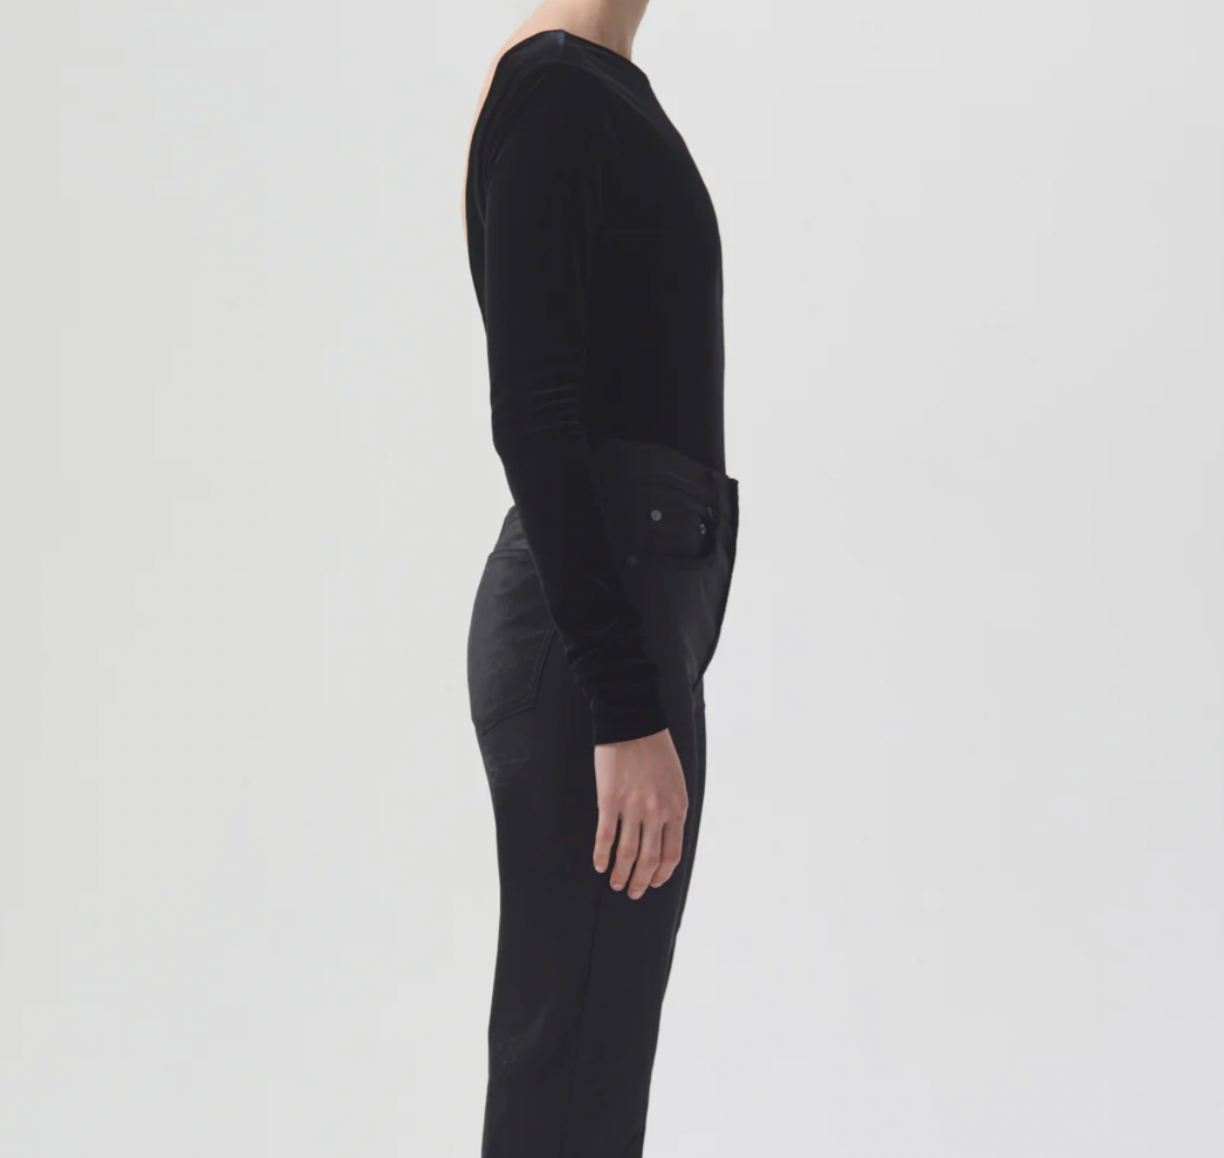 Product Image for Corrin Scoop Back Bodysuit, Black